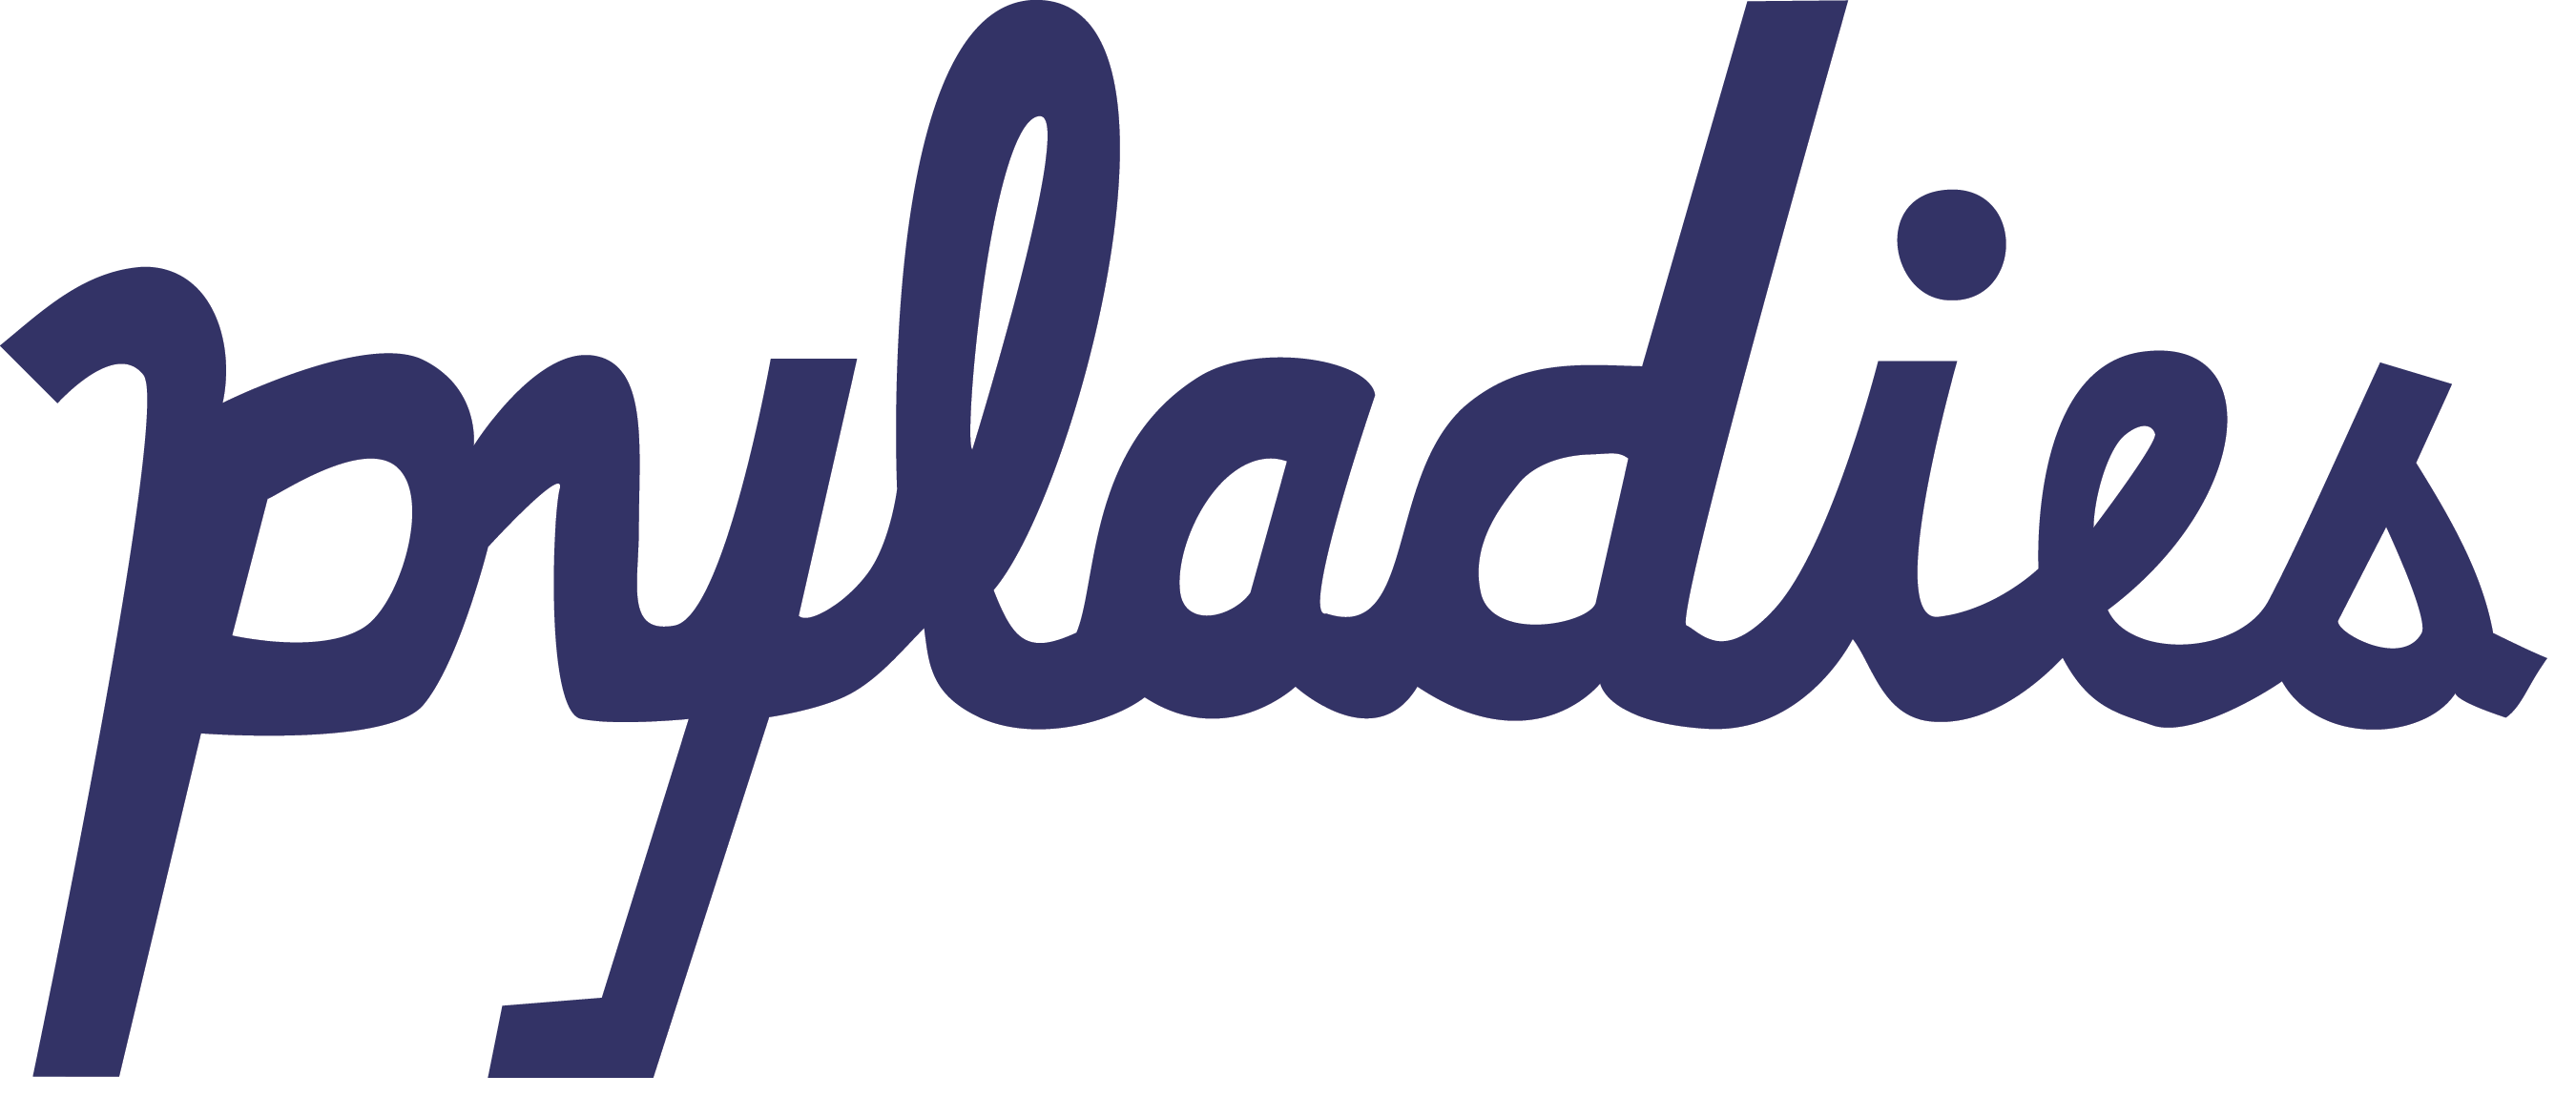 A PyLadies-packed PyCon 2015 – PyLadies